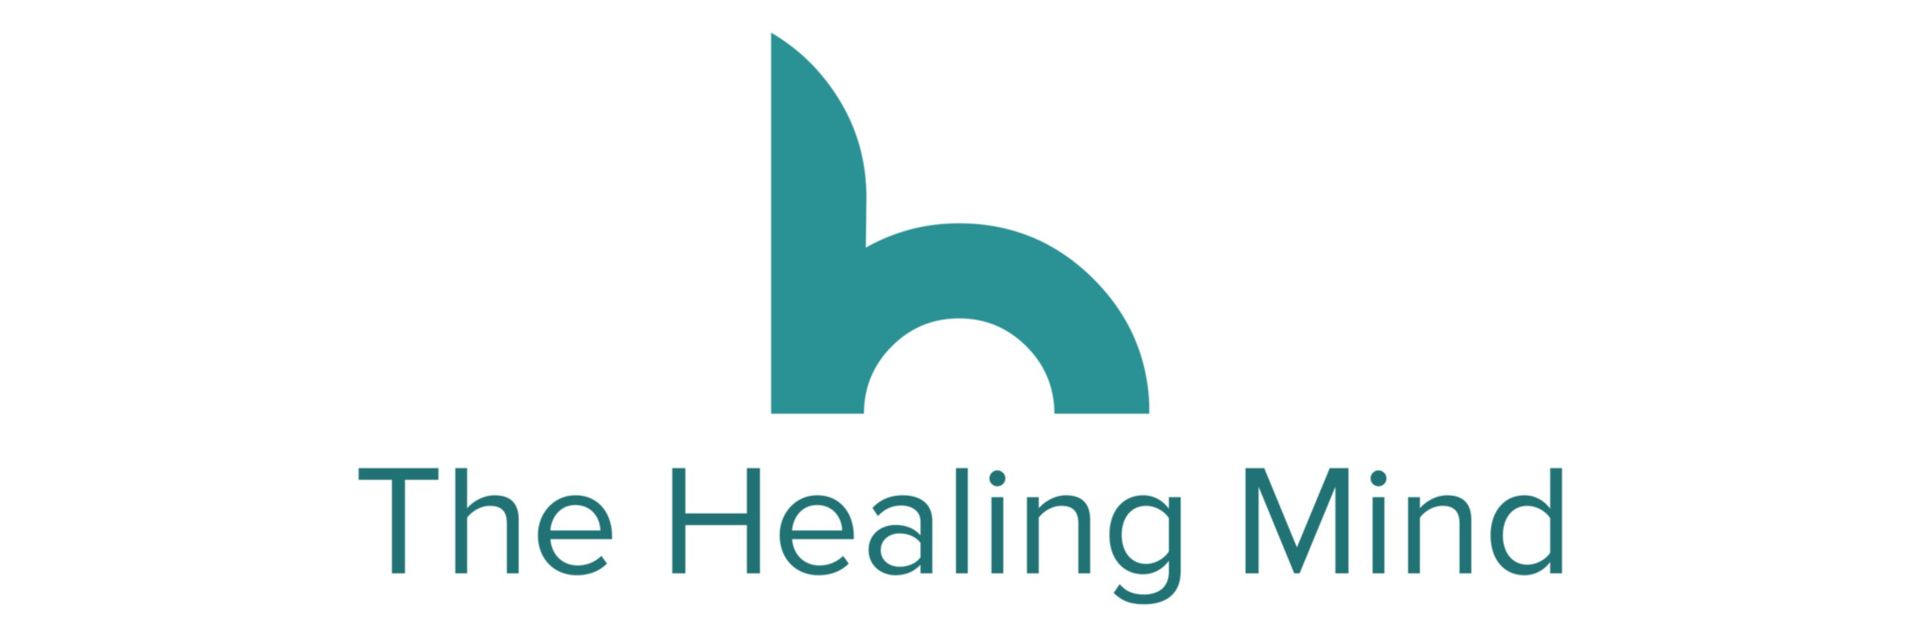 The Healing Mind Logo